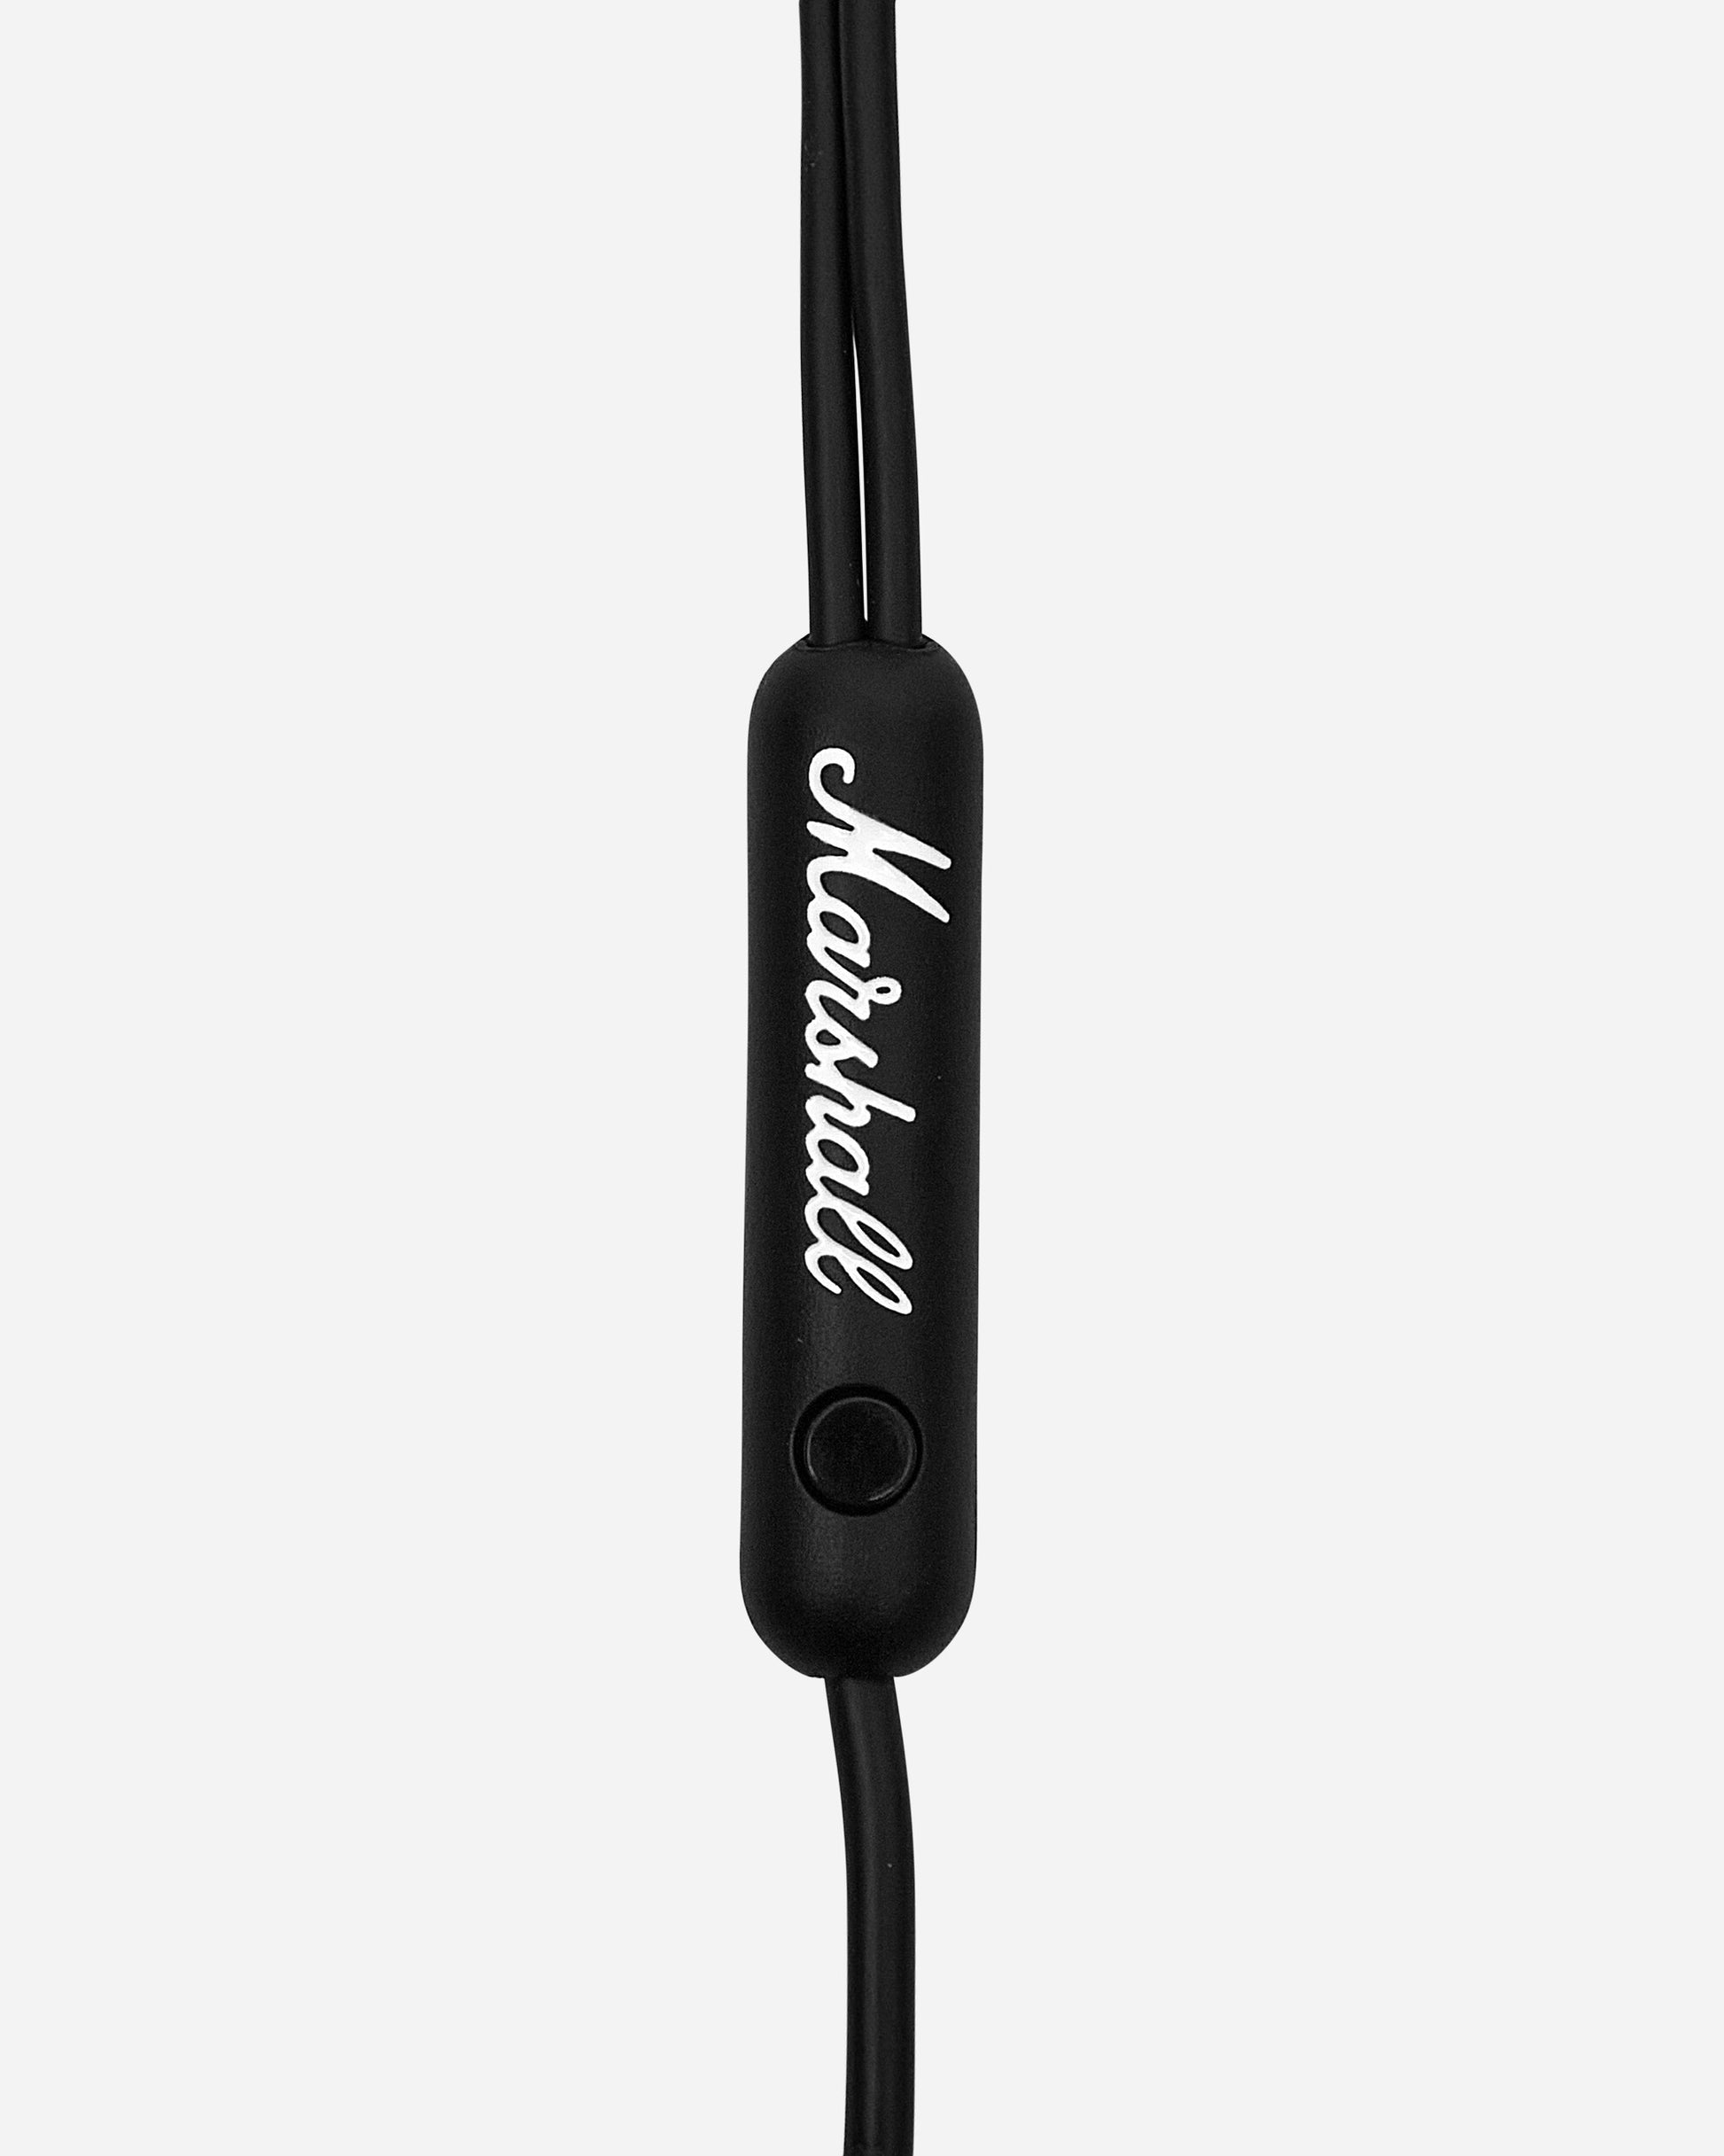 Marshall Marshall Mode Black Tech and Audio Headphones 1000525 001